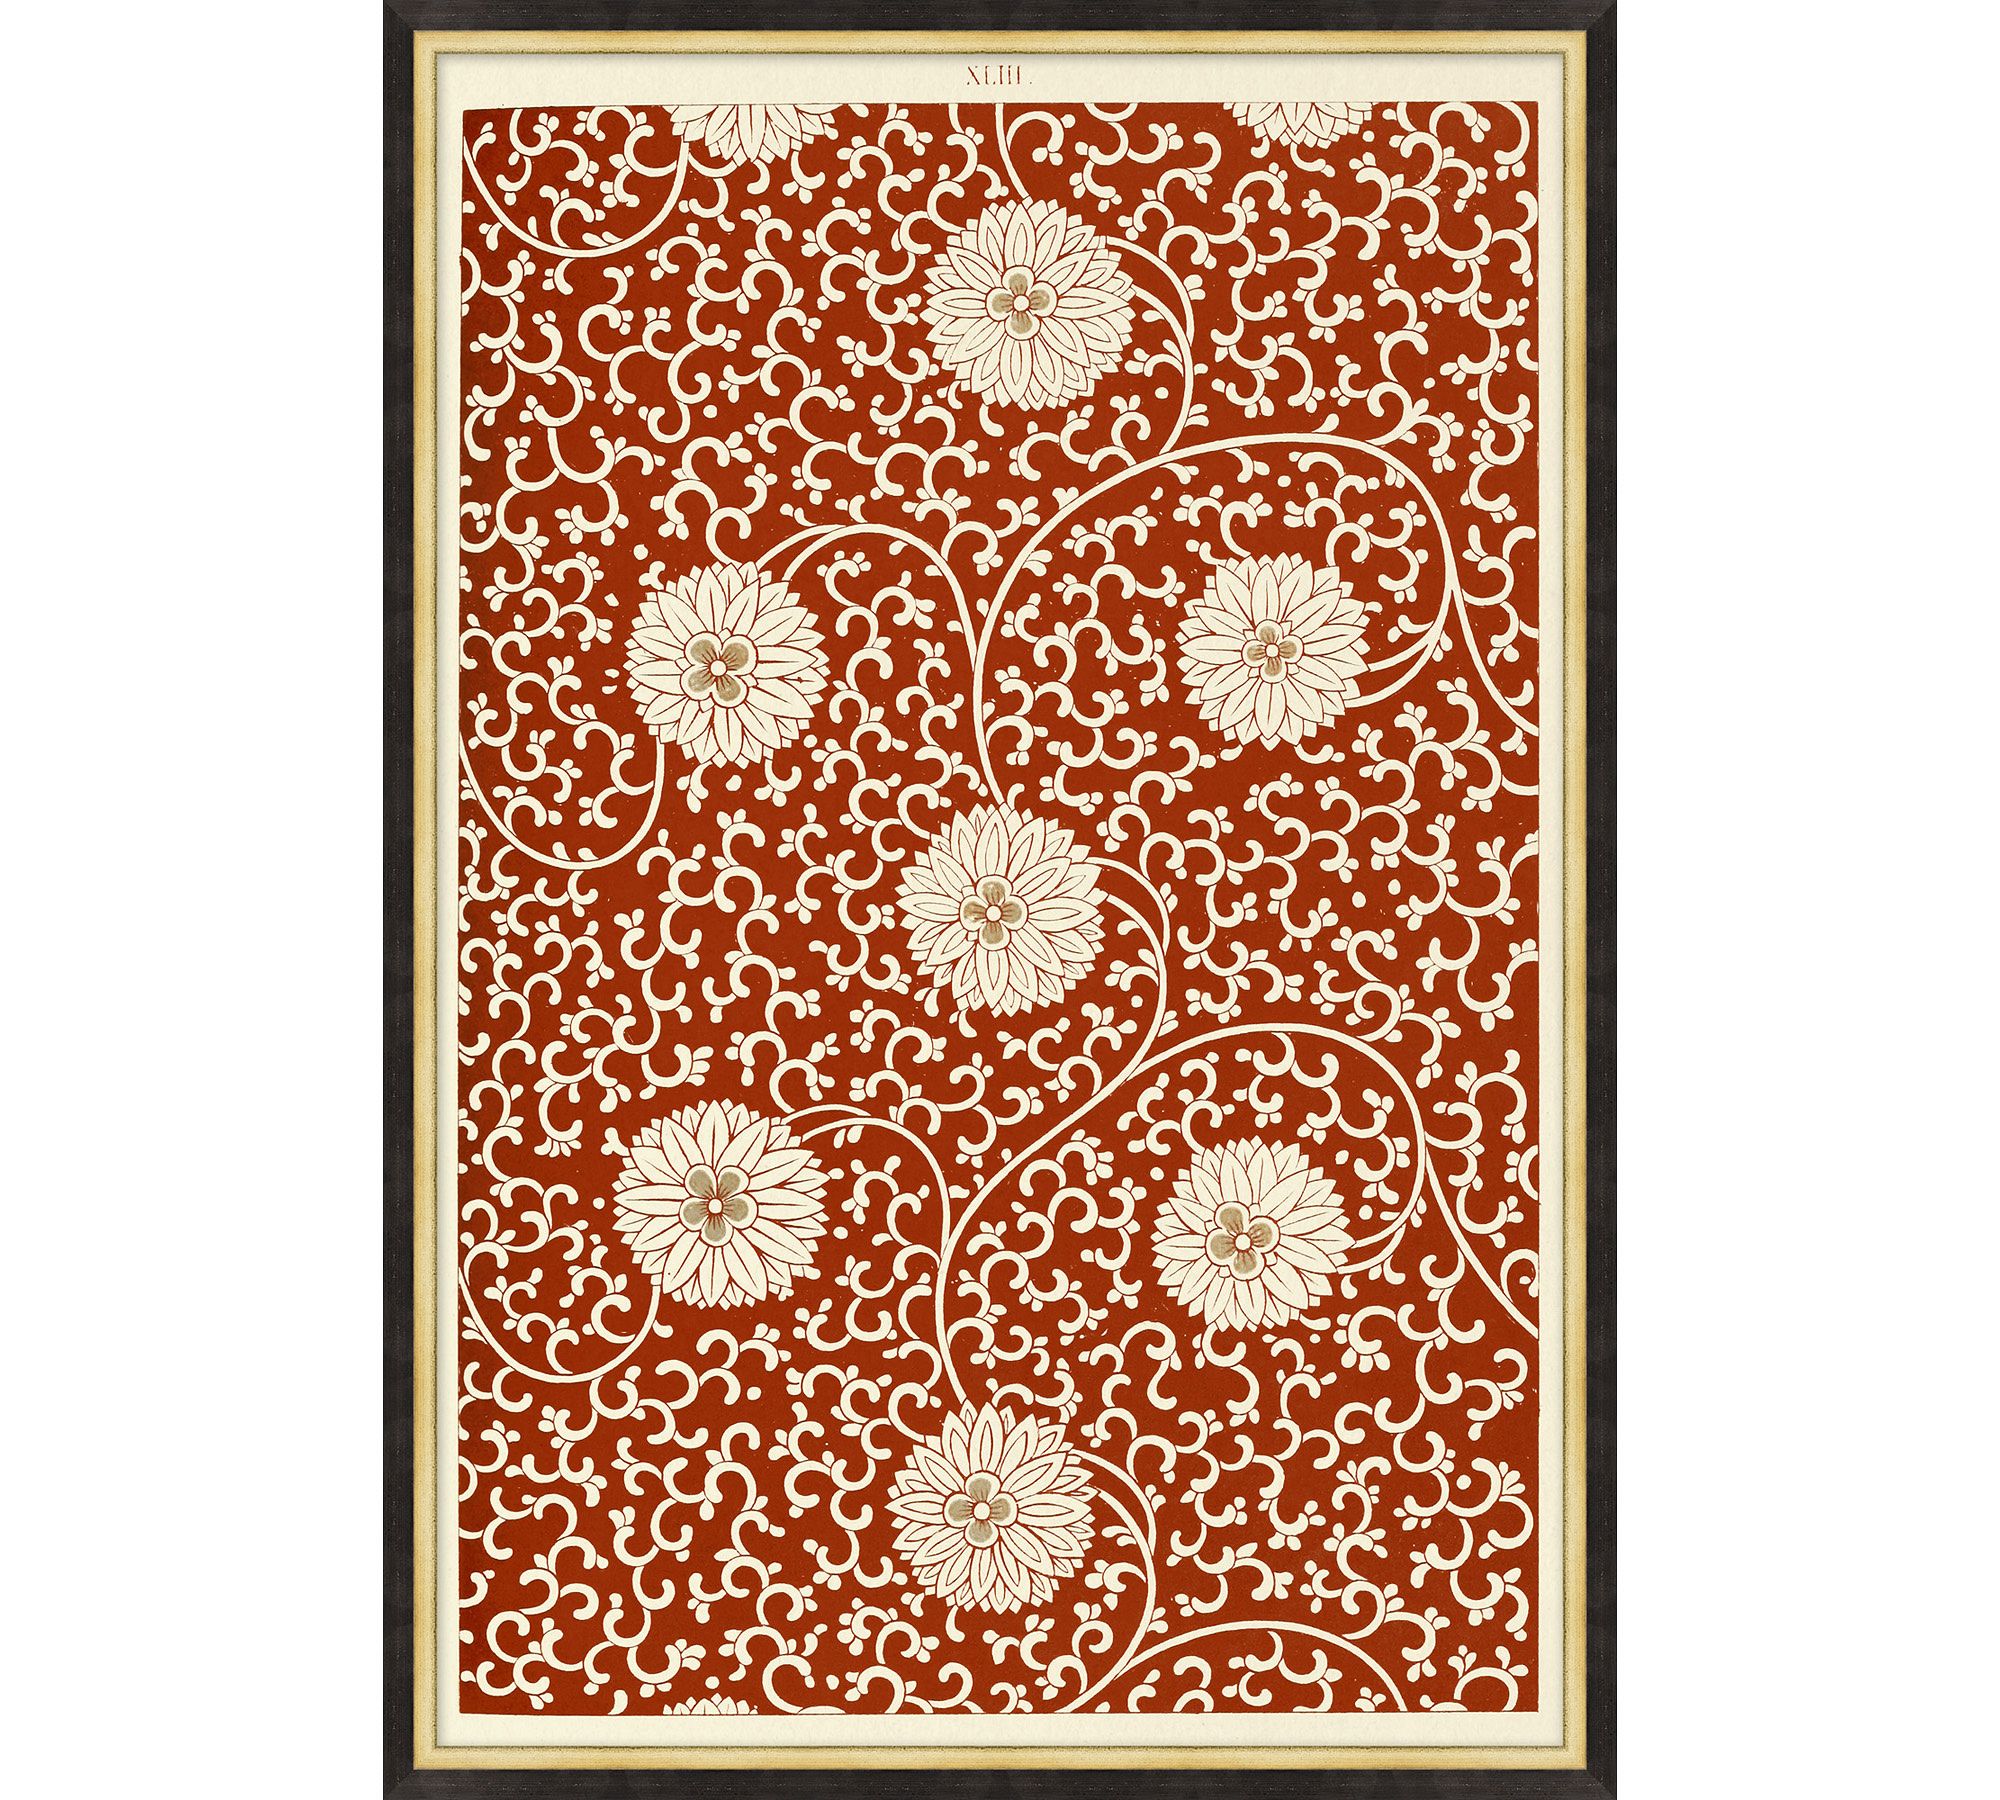 Flowers on Pattern Framed Print